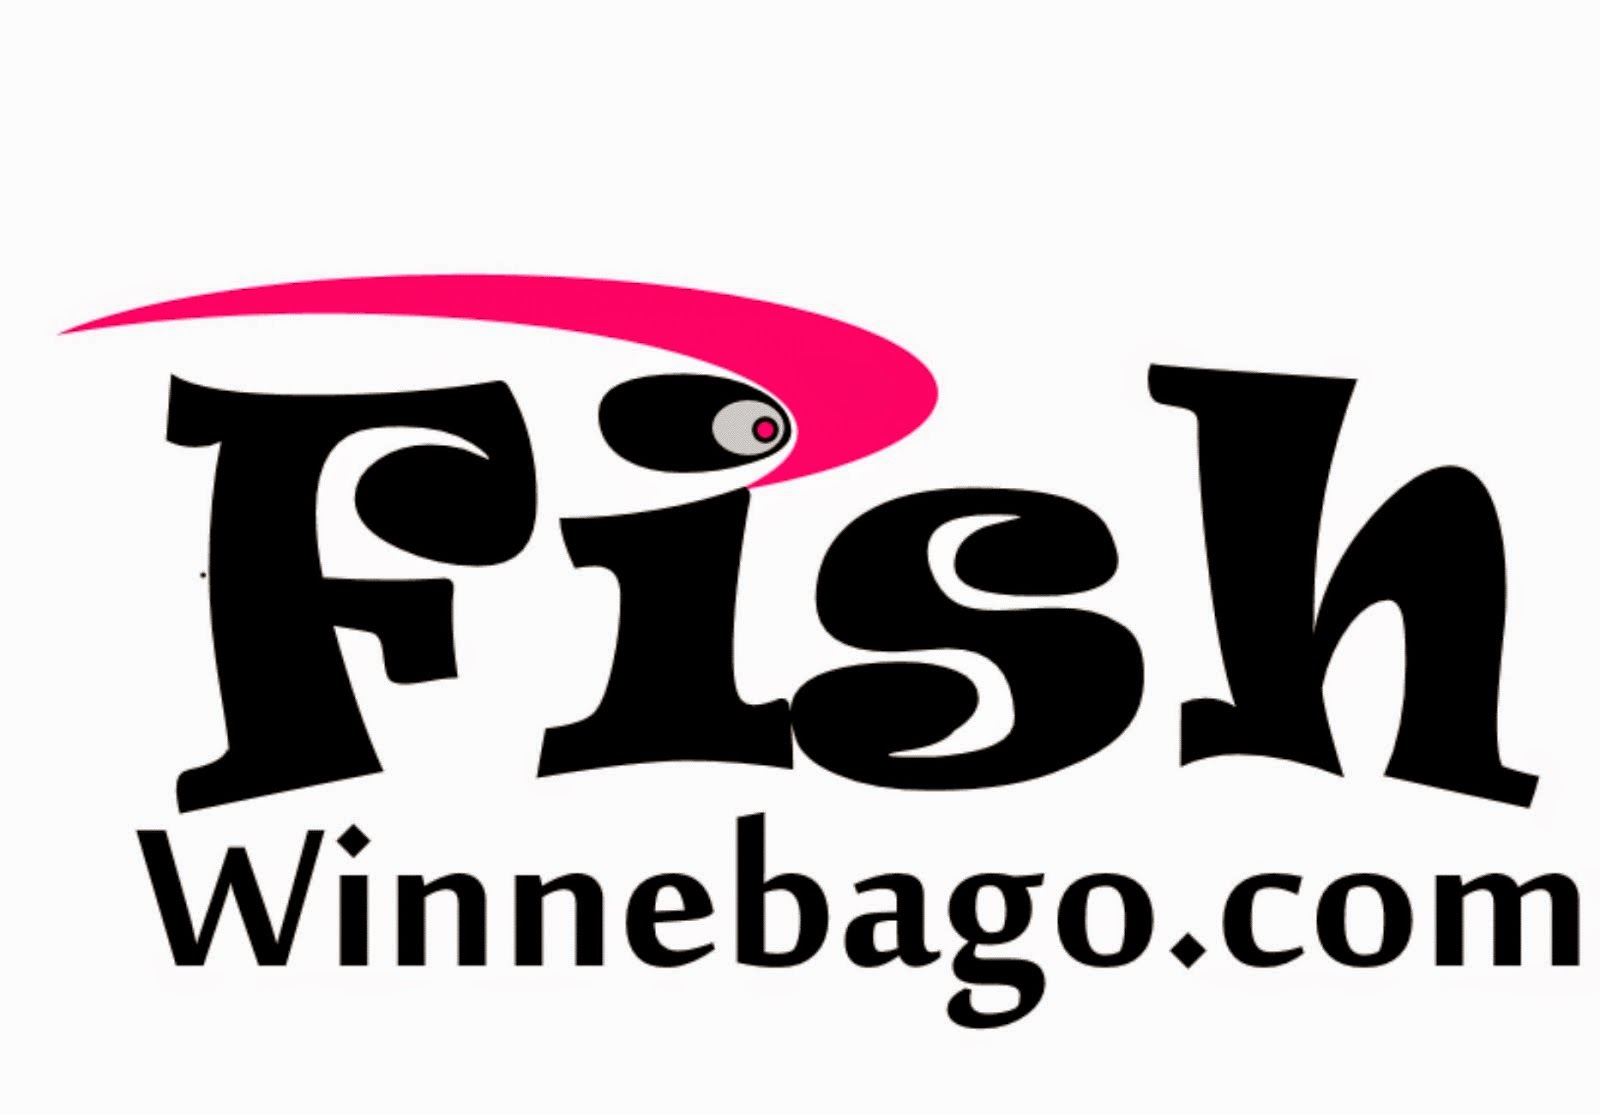 FishWinnebago.com